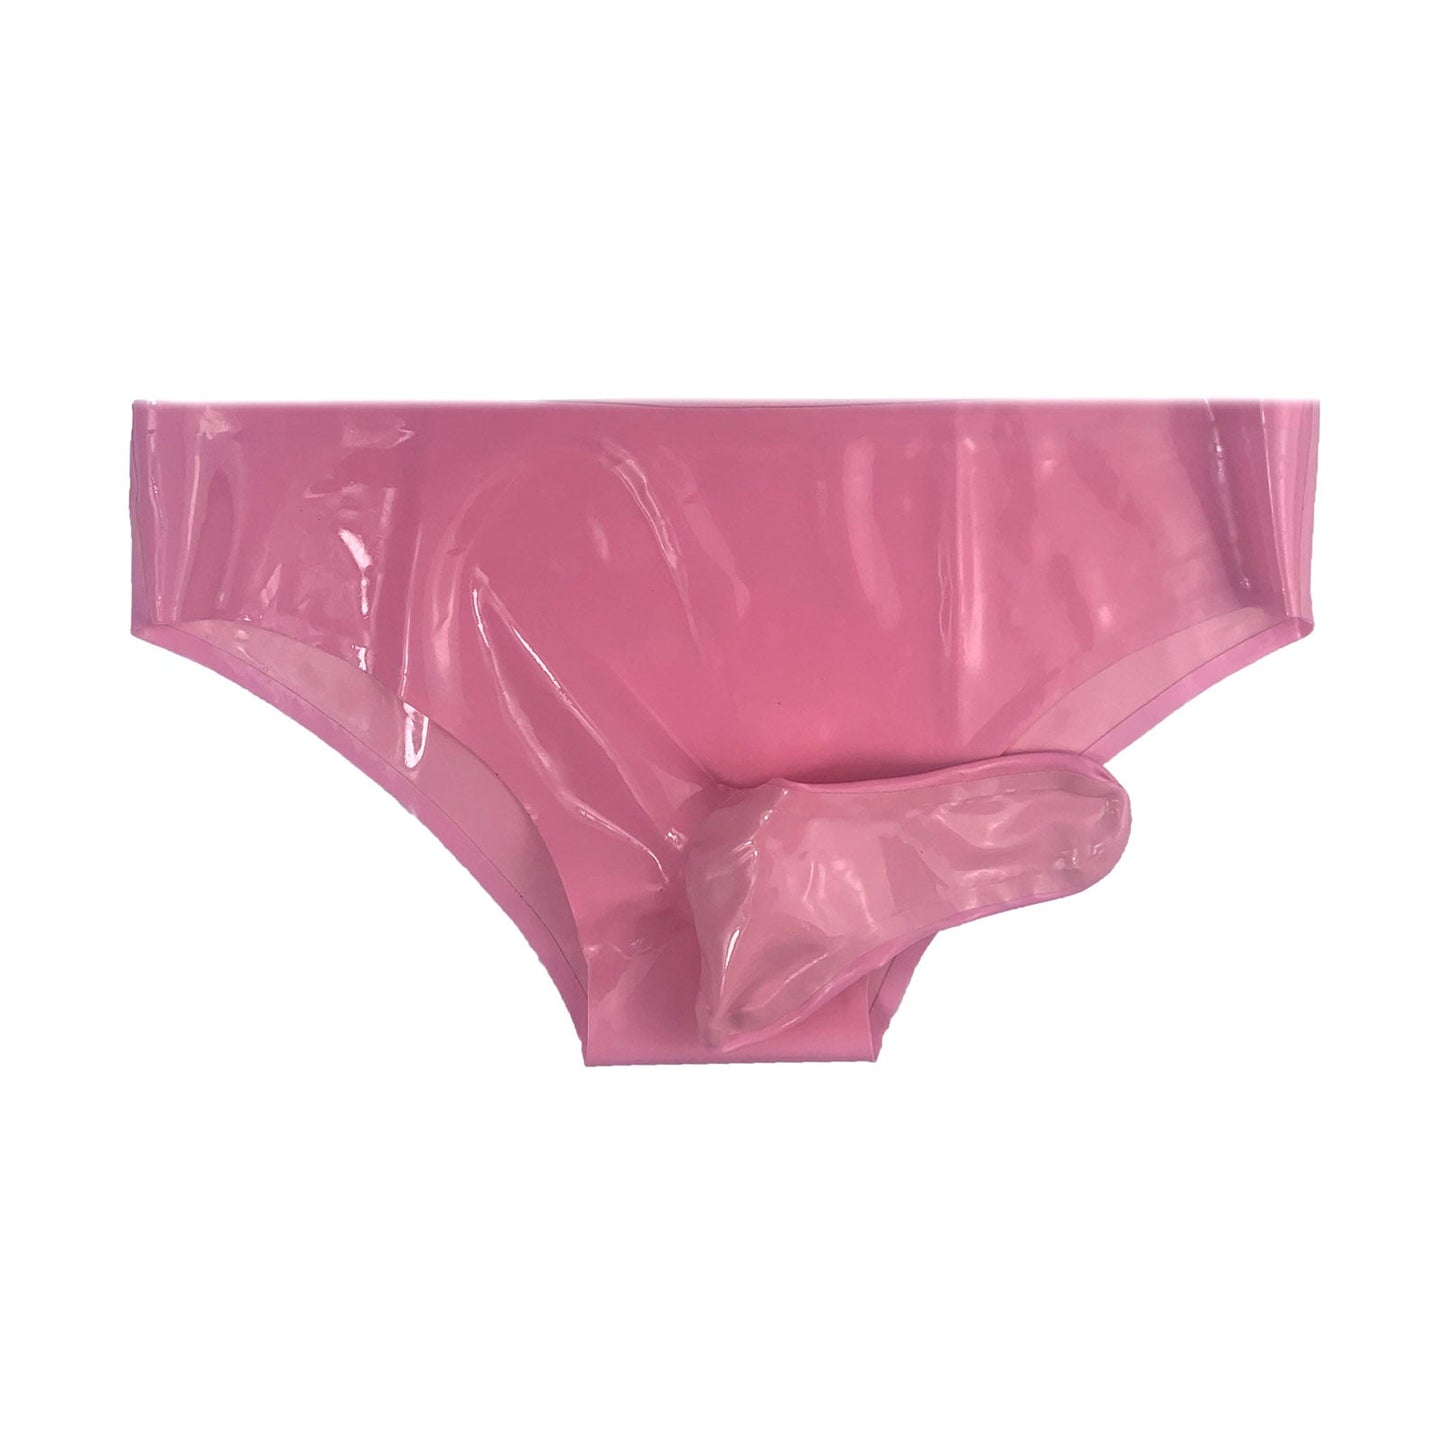 MONNIK Latex Briefs Rubber Men Pink Tight Shorts with Straight 16cm Sheath(Condom)  Underwear for Fetish Party Bodysuit Club